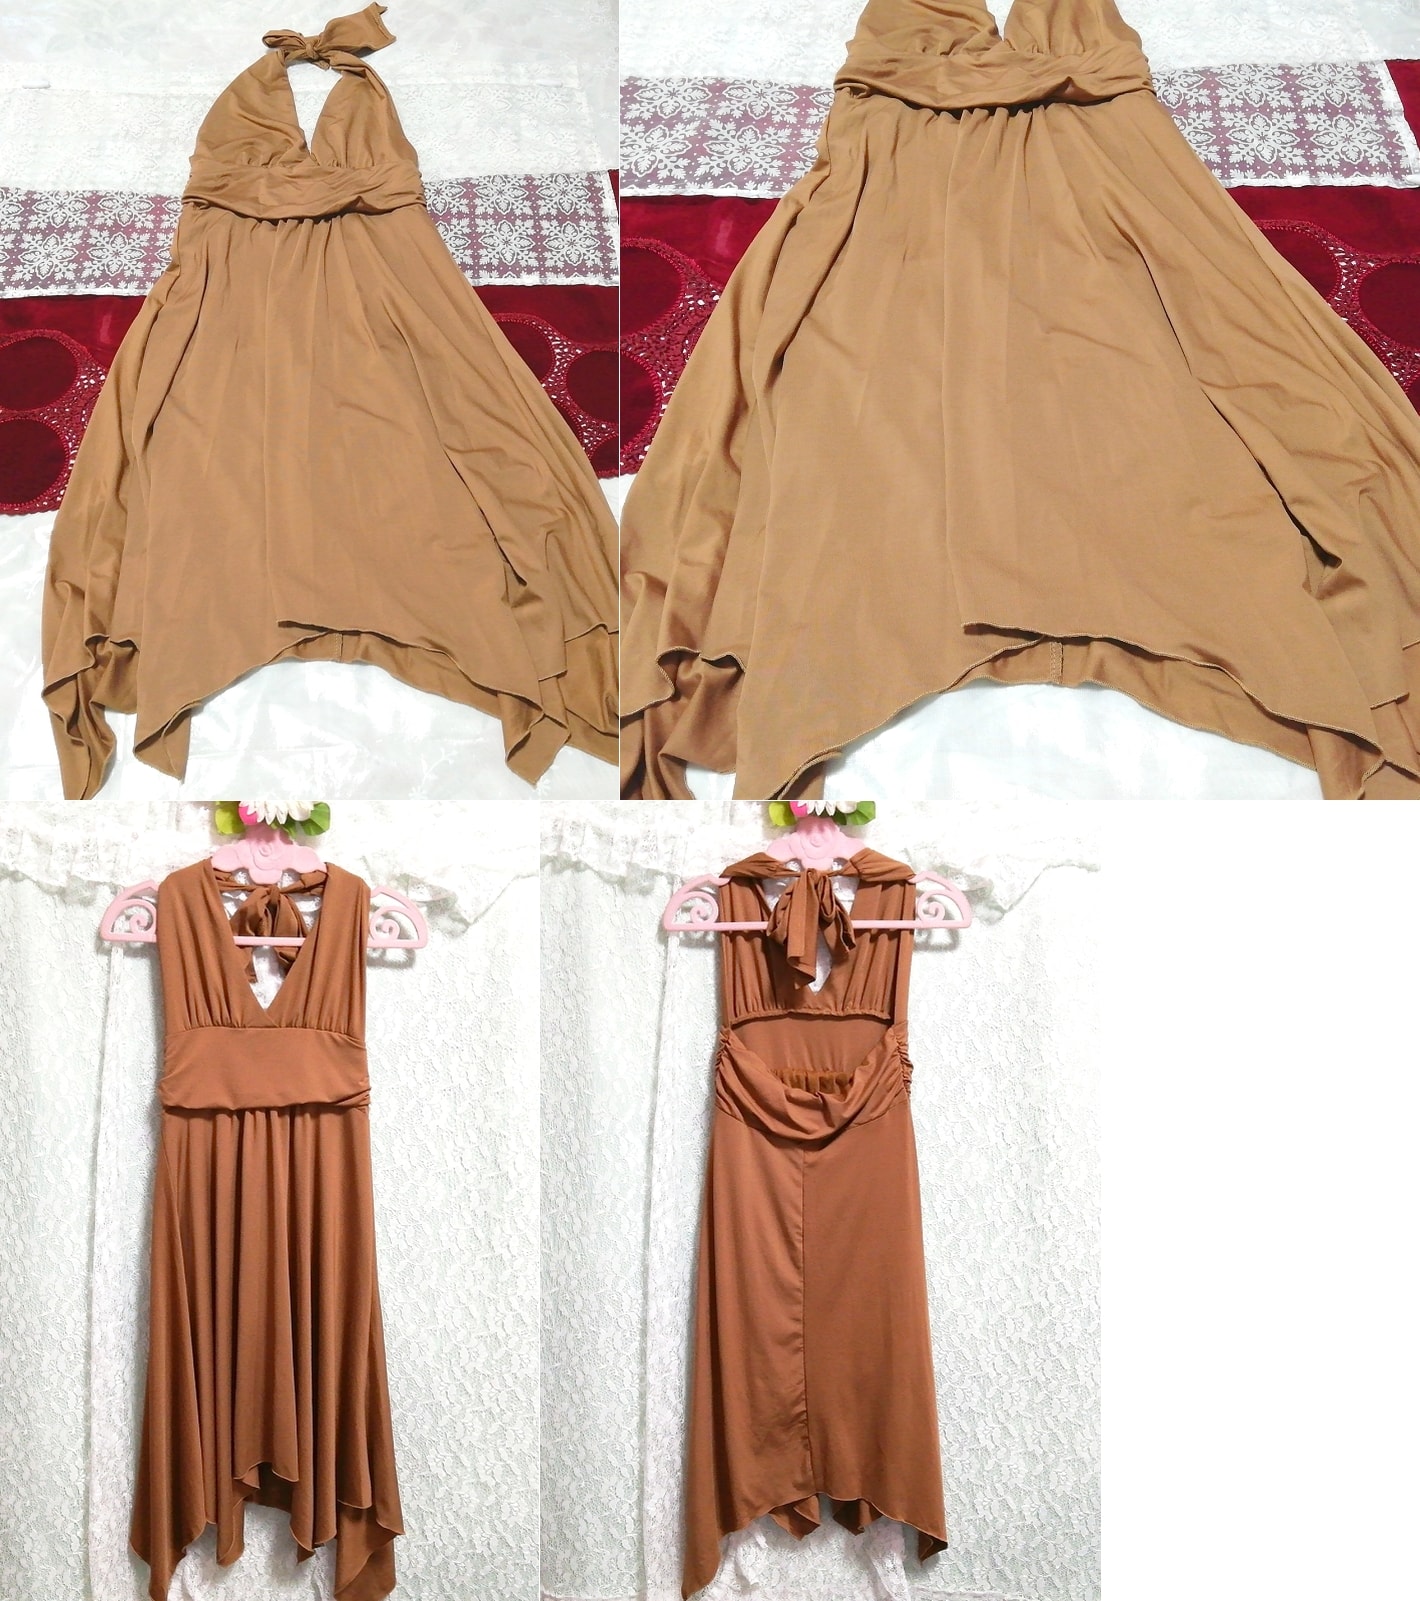 Plain brown backless sleeveless negligee nightgown nightwear half dress, knee length skirt, m size